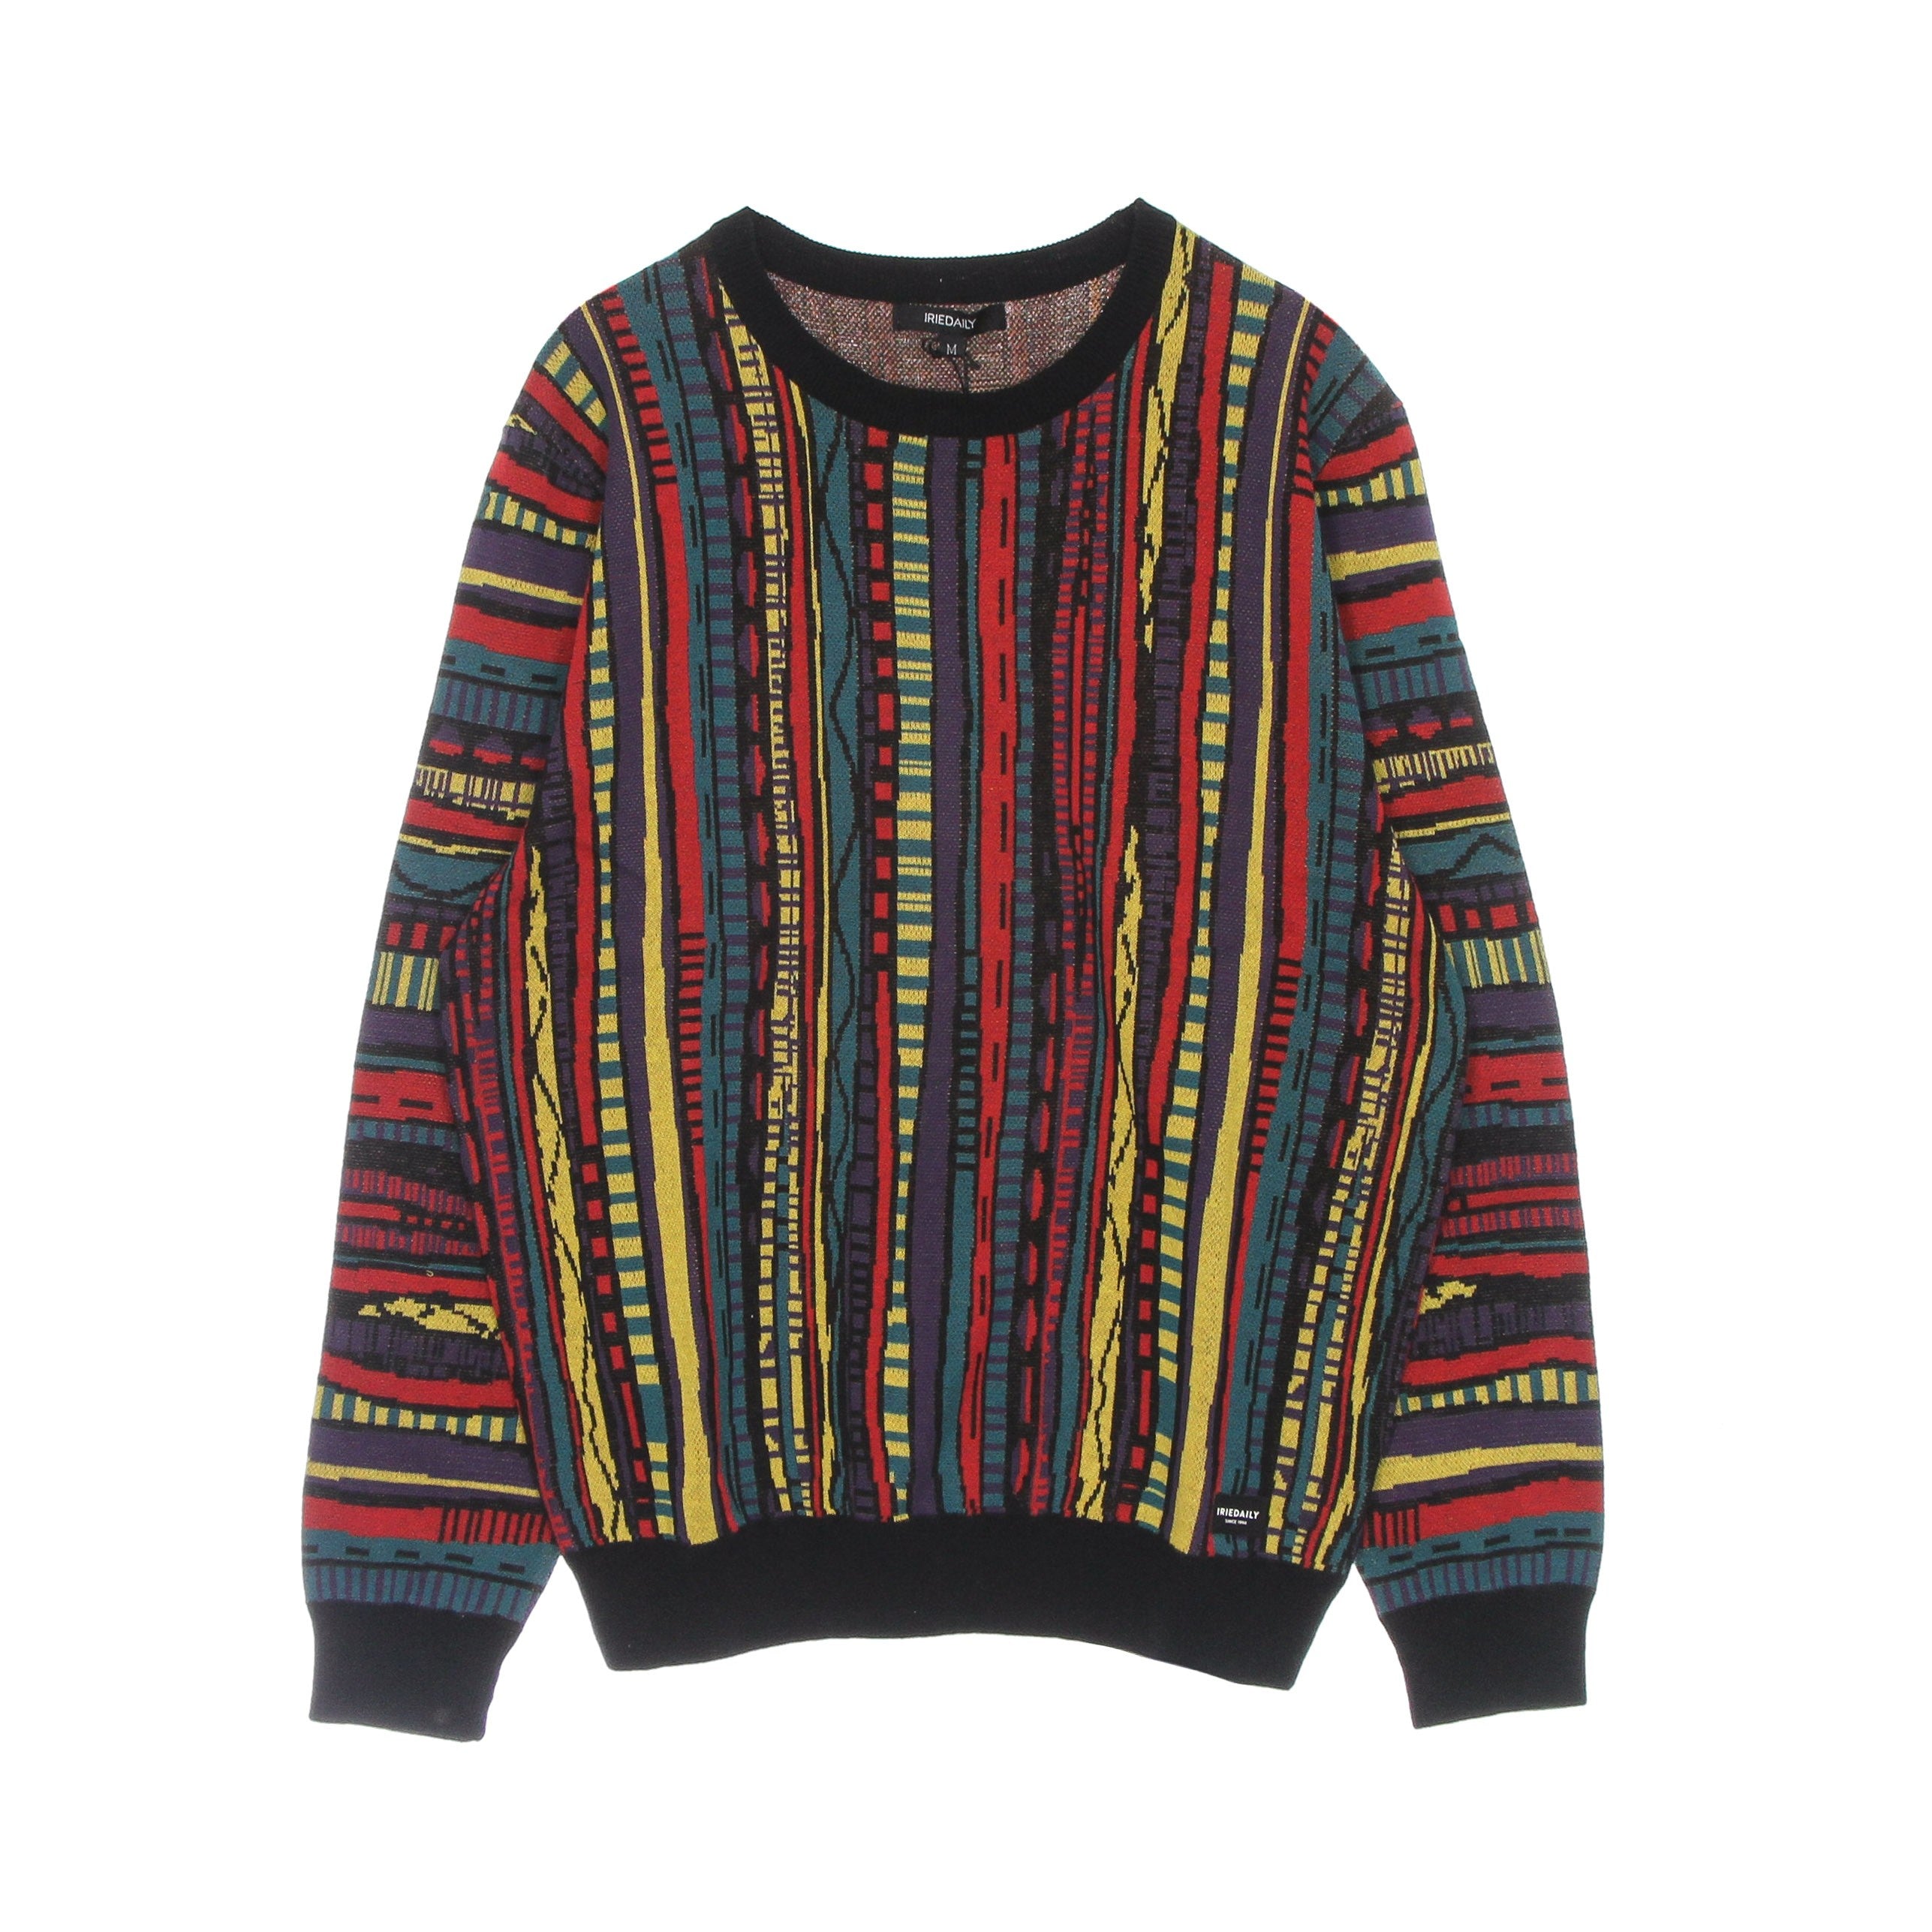 Theodore Summer Knit Men's Sweater